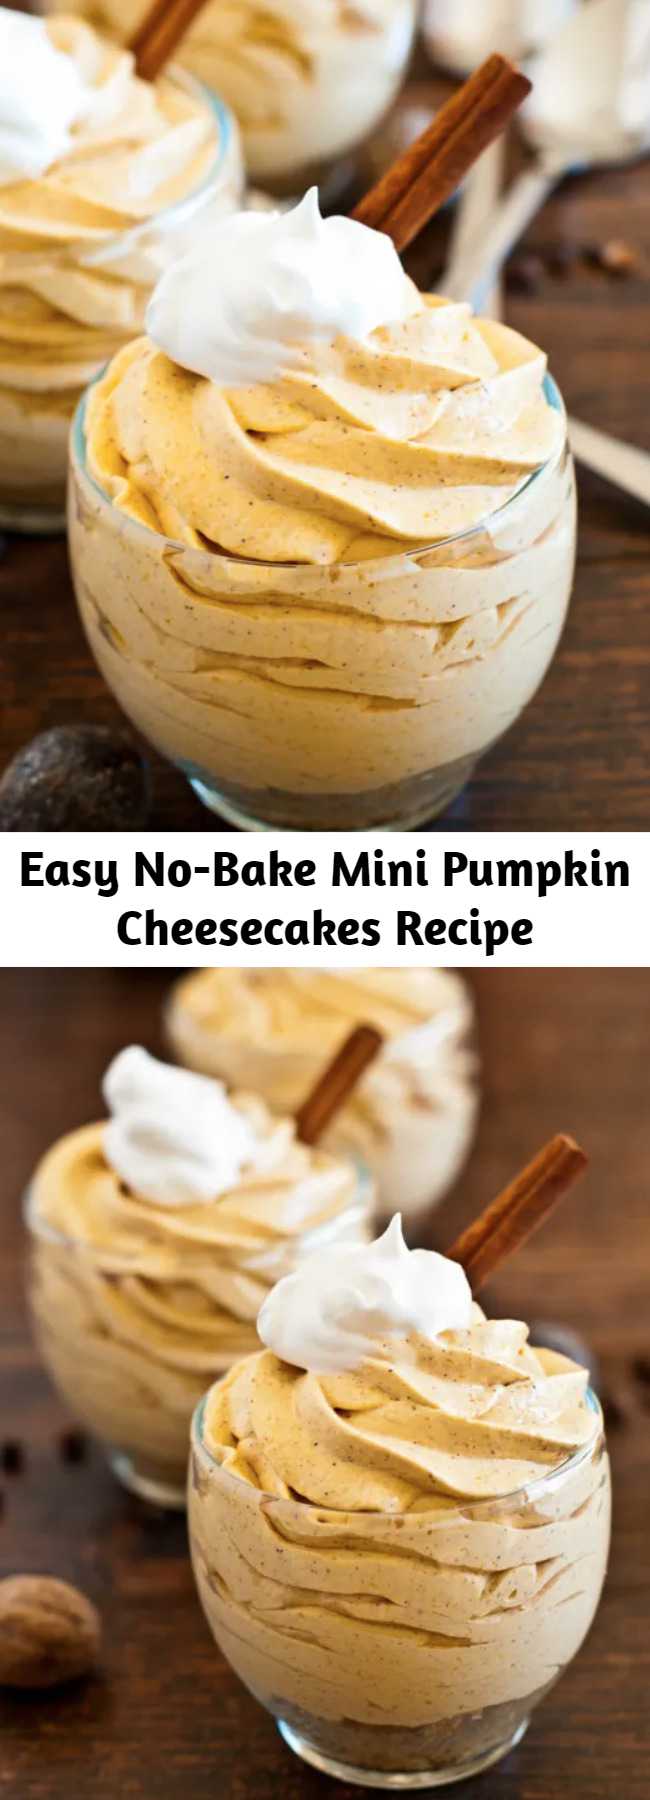 Easy No-Bake Mini Pumpkin Cheesecakes Recipe - These No-Bake Mini Pumpkin Cheesecakes are easy to make and so delicious! #PumpkinRecipe #pumpkin #cheesecake #FallDesserts